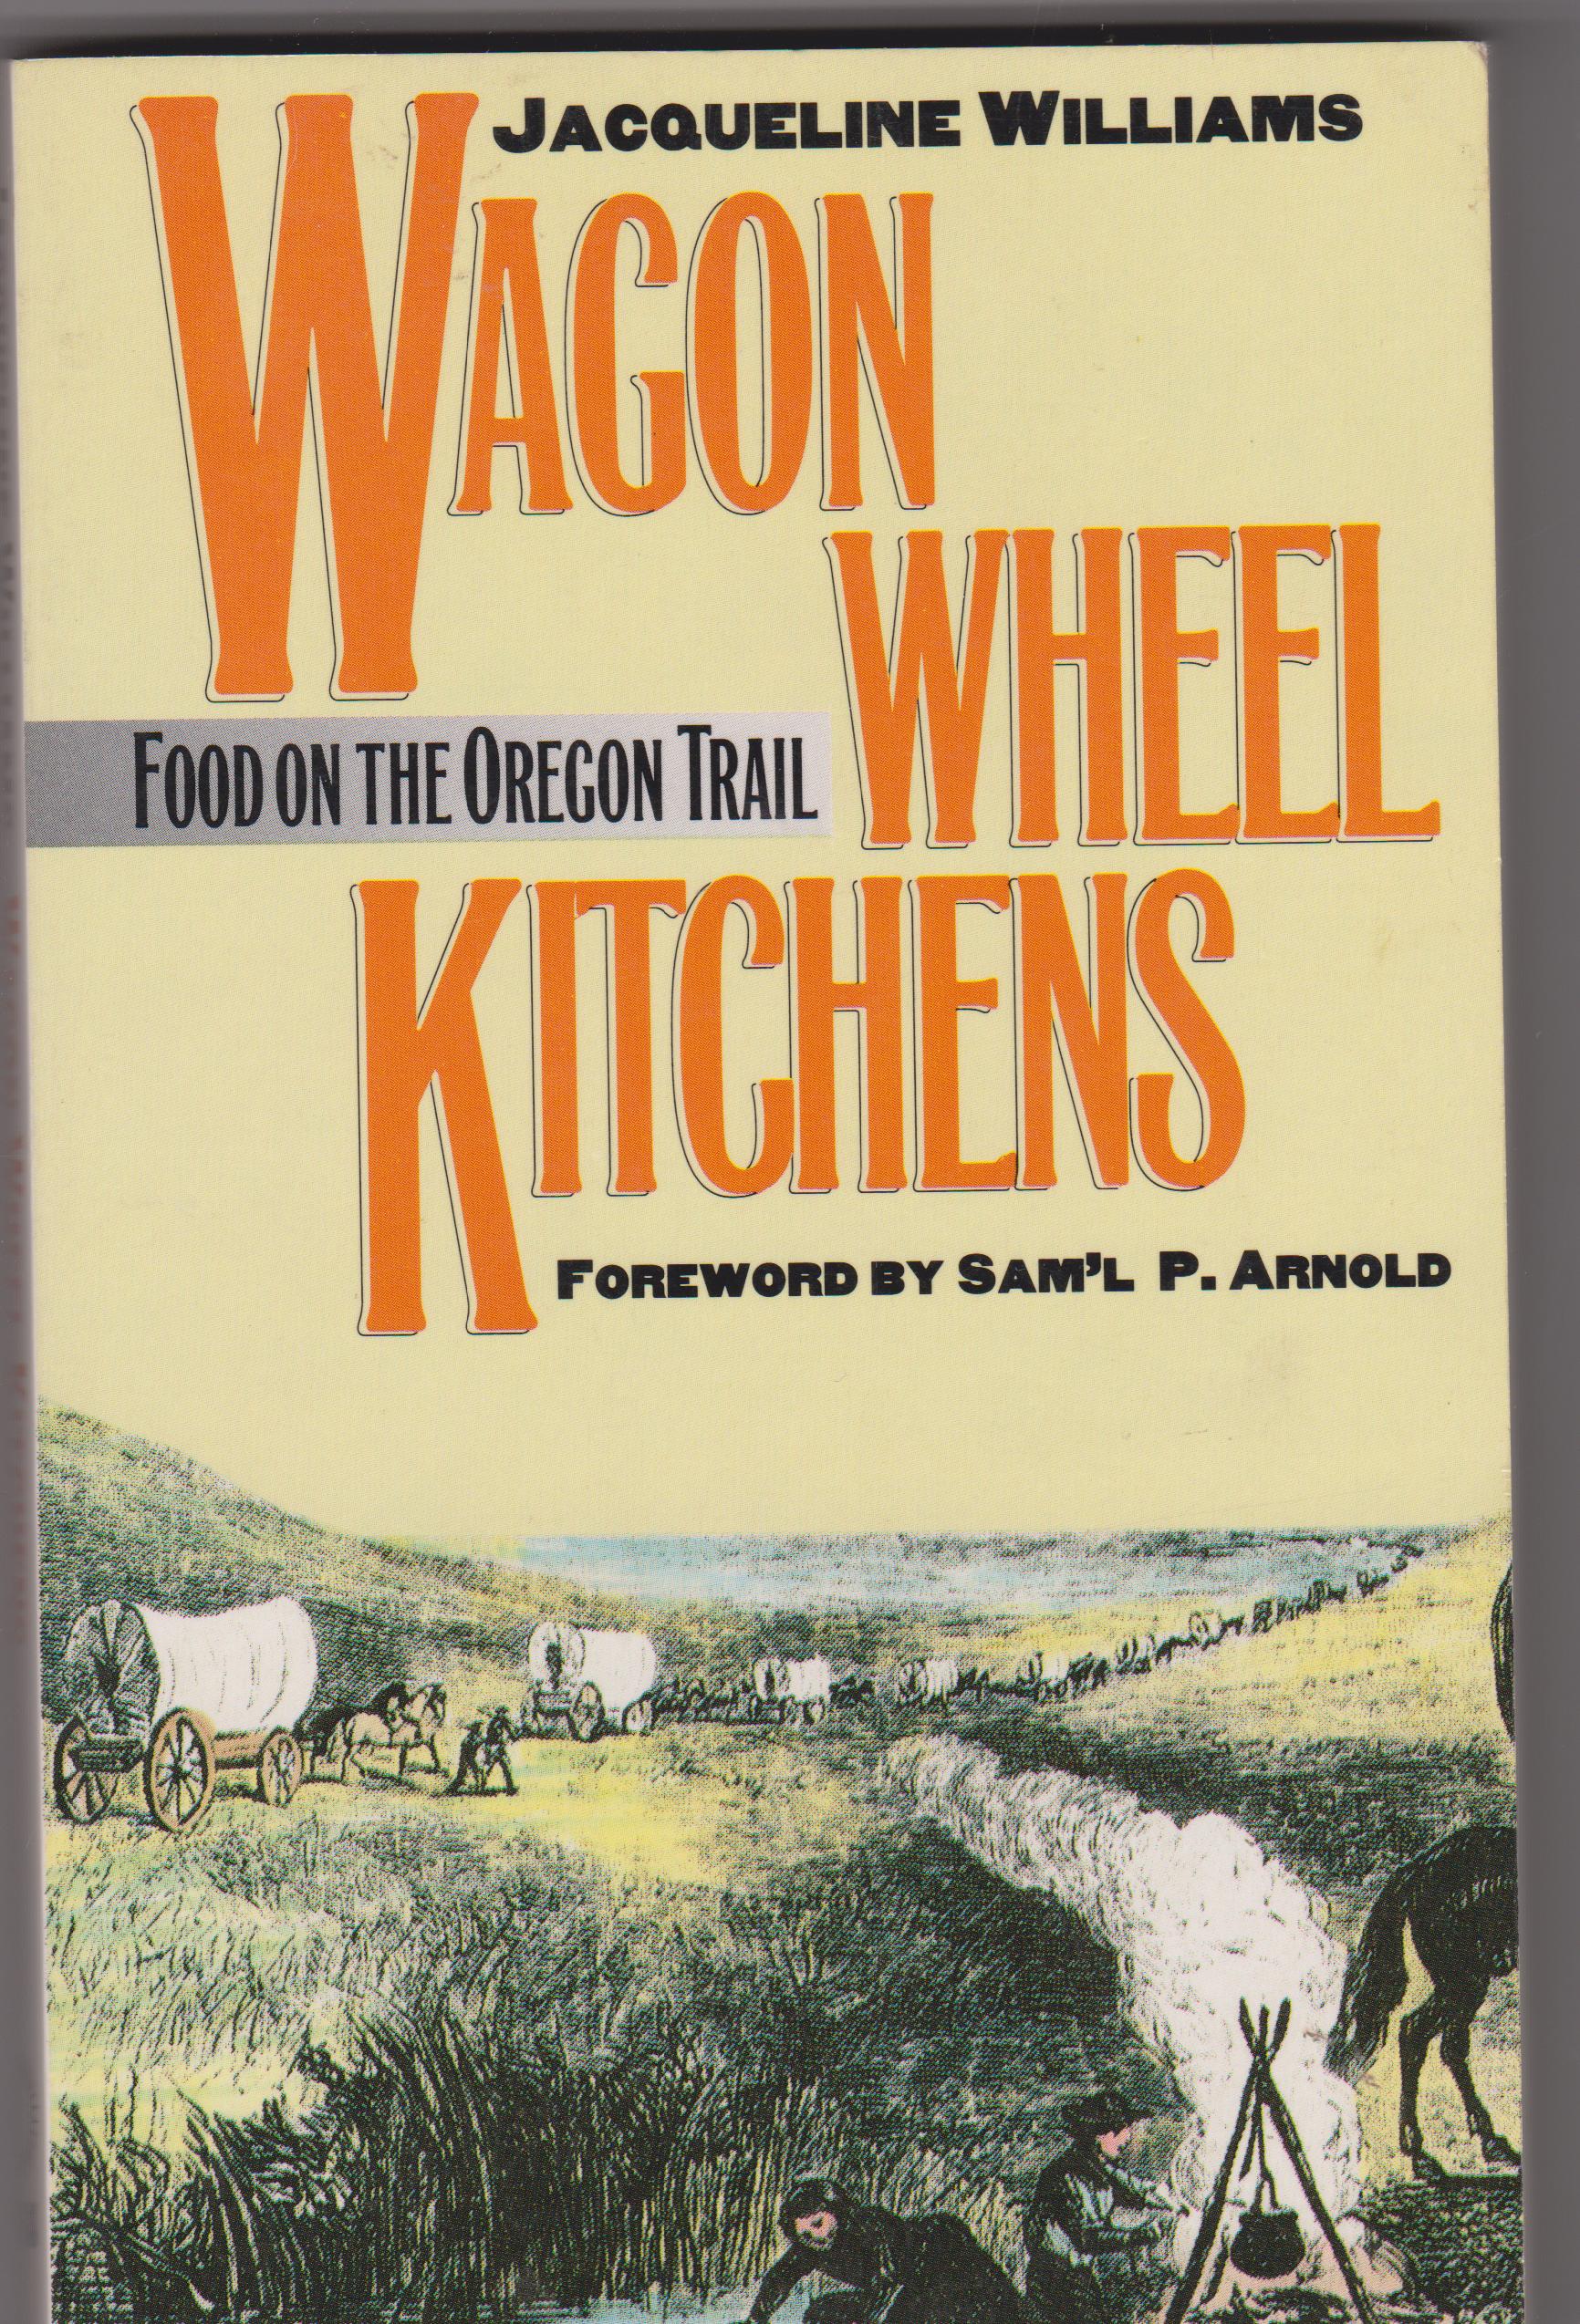 https://sandychatter.files.wordpress.com/2012/08/wagon-wheel-kitchens-001.jpg